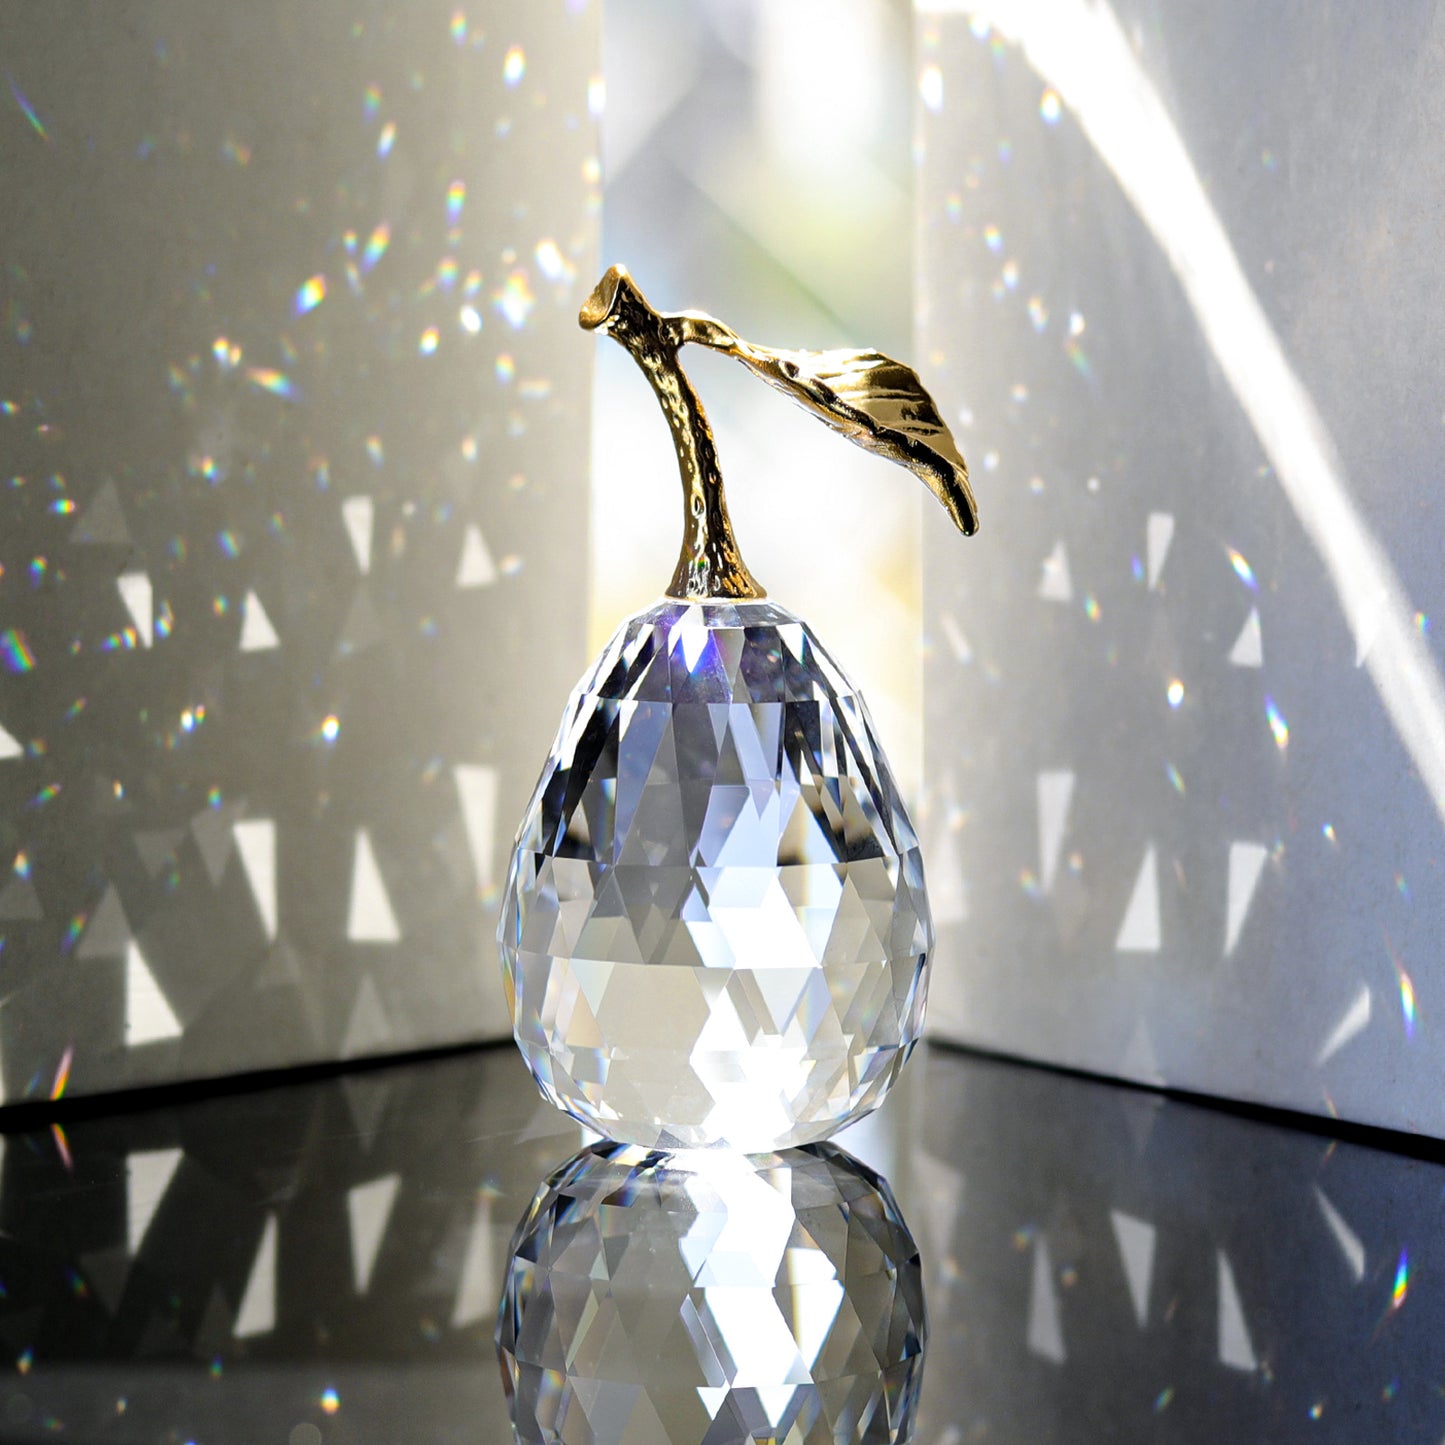 Crystal Pear Figurine with Golden Leaf